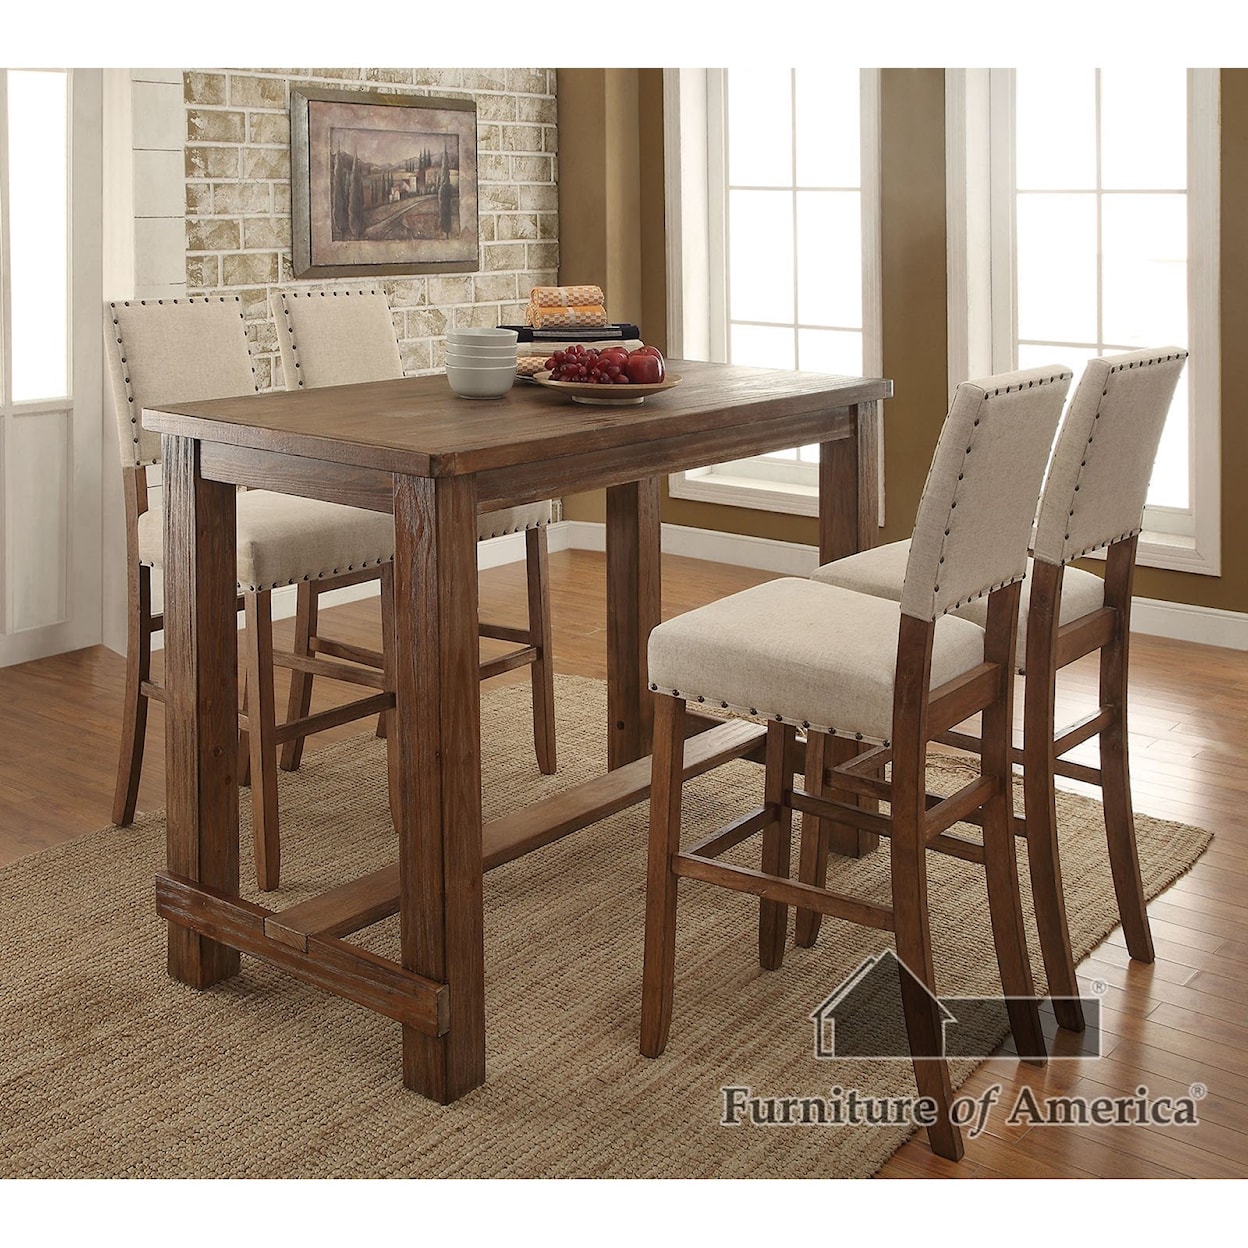 Furniture of America Sania III Bar Height Table